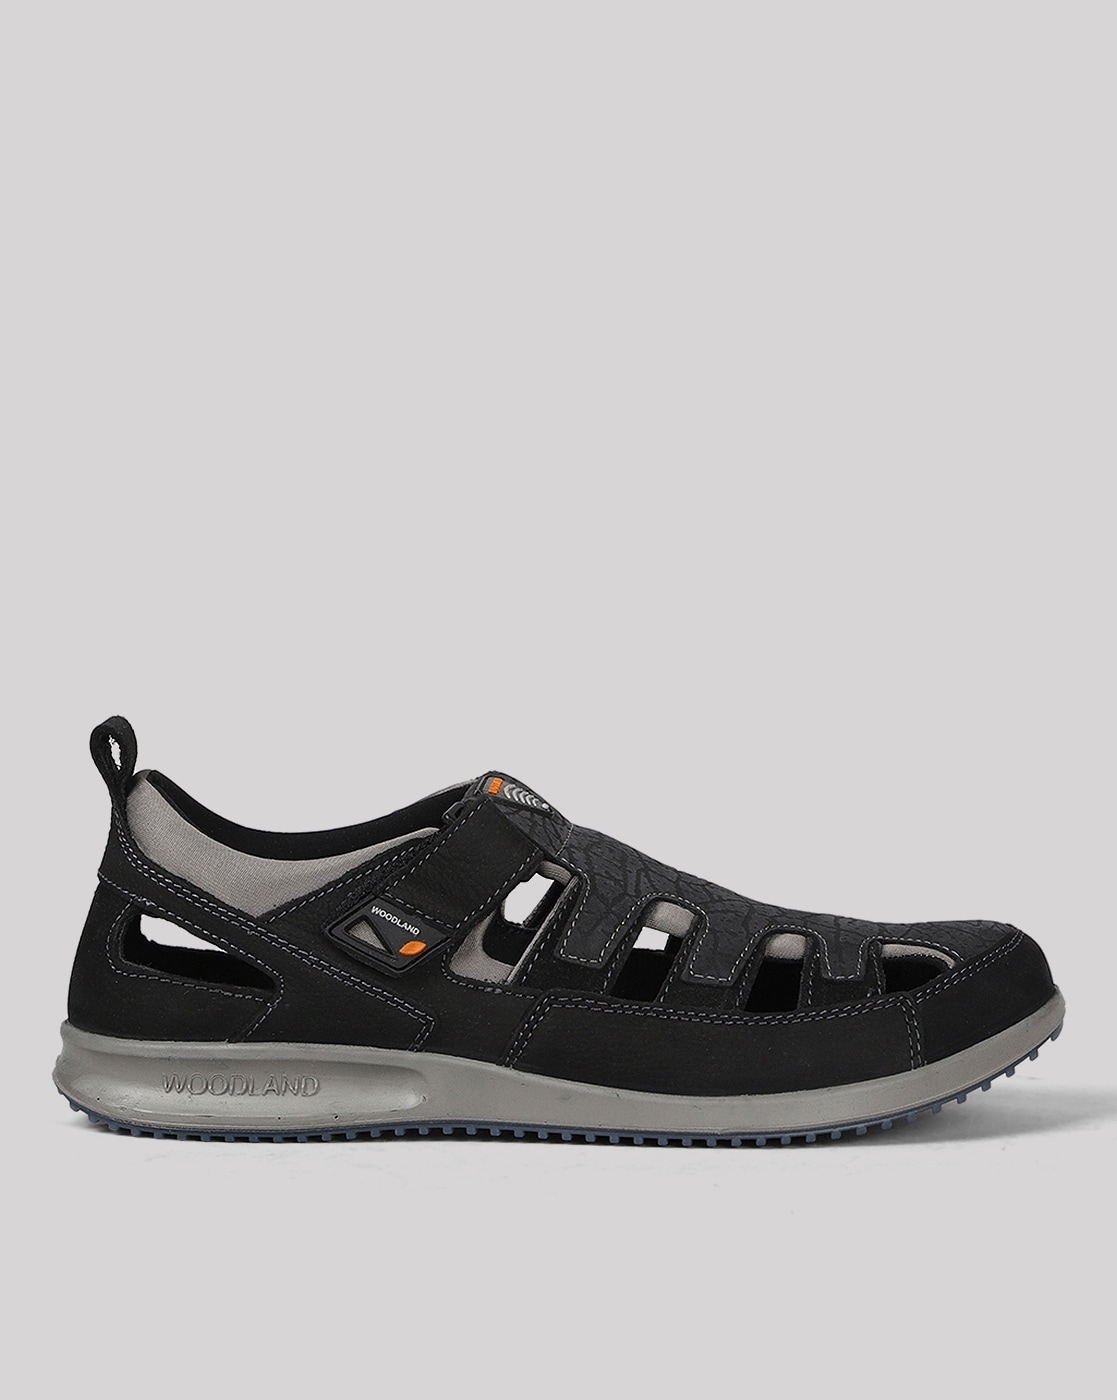 Buy Woodland Grey Floater Sandals For Men Online At Tata CLiQ